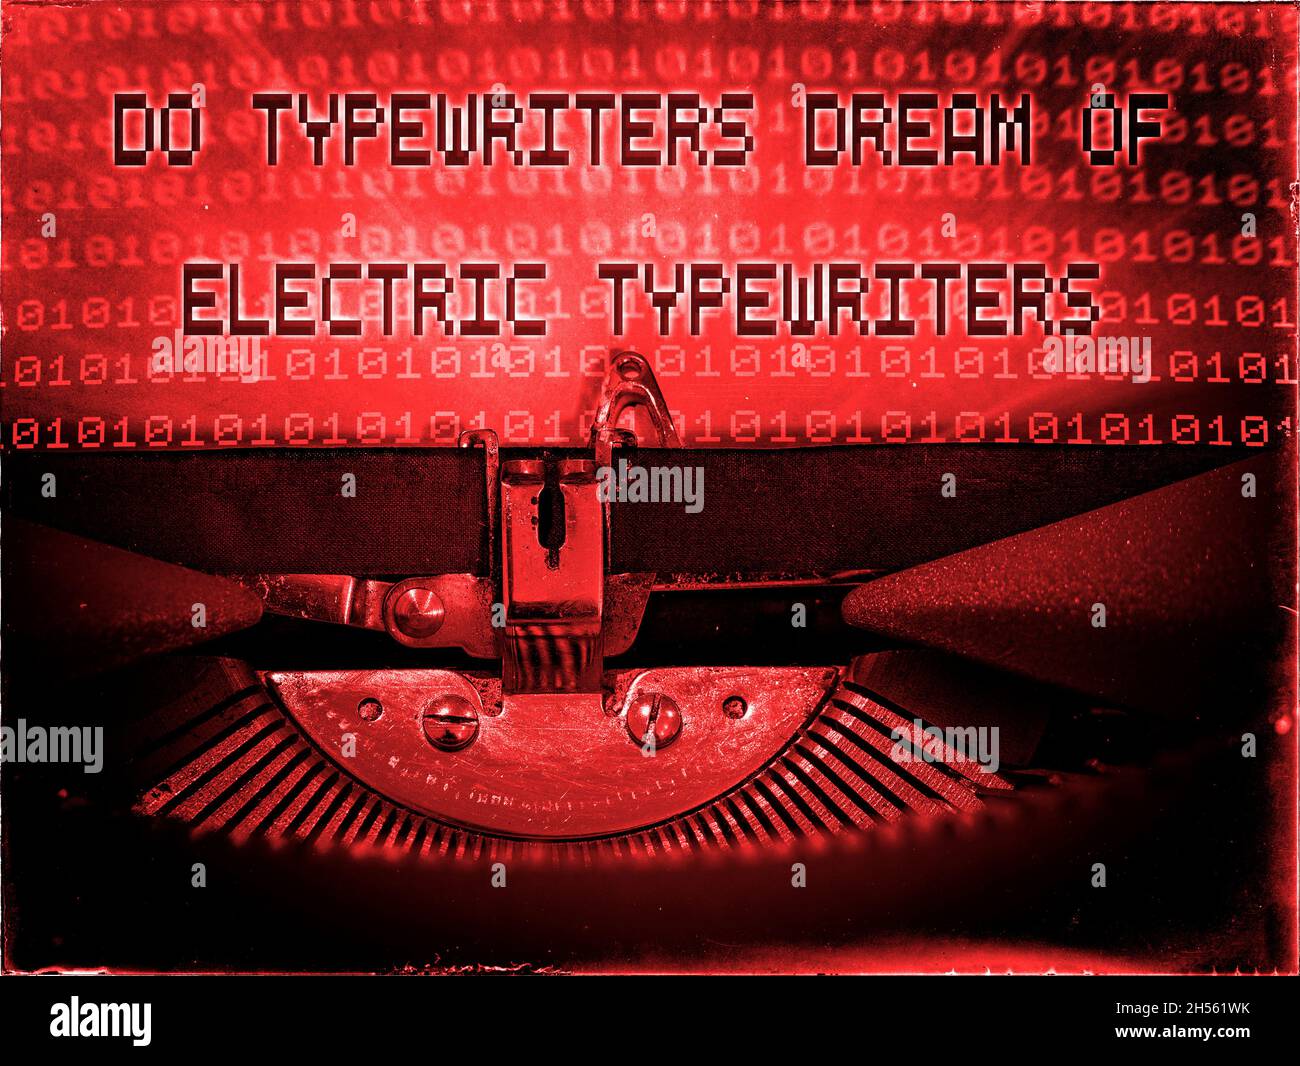 Do Typewriters Dream OF Electric Typewriters Stock Photo